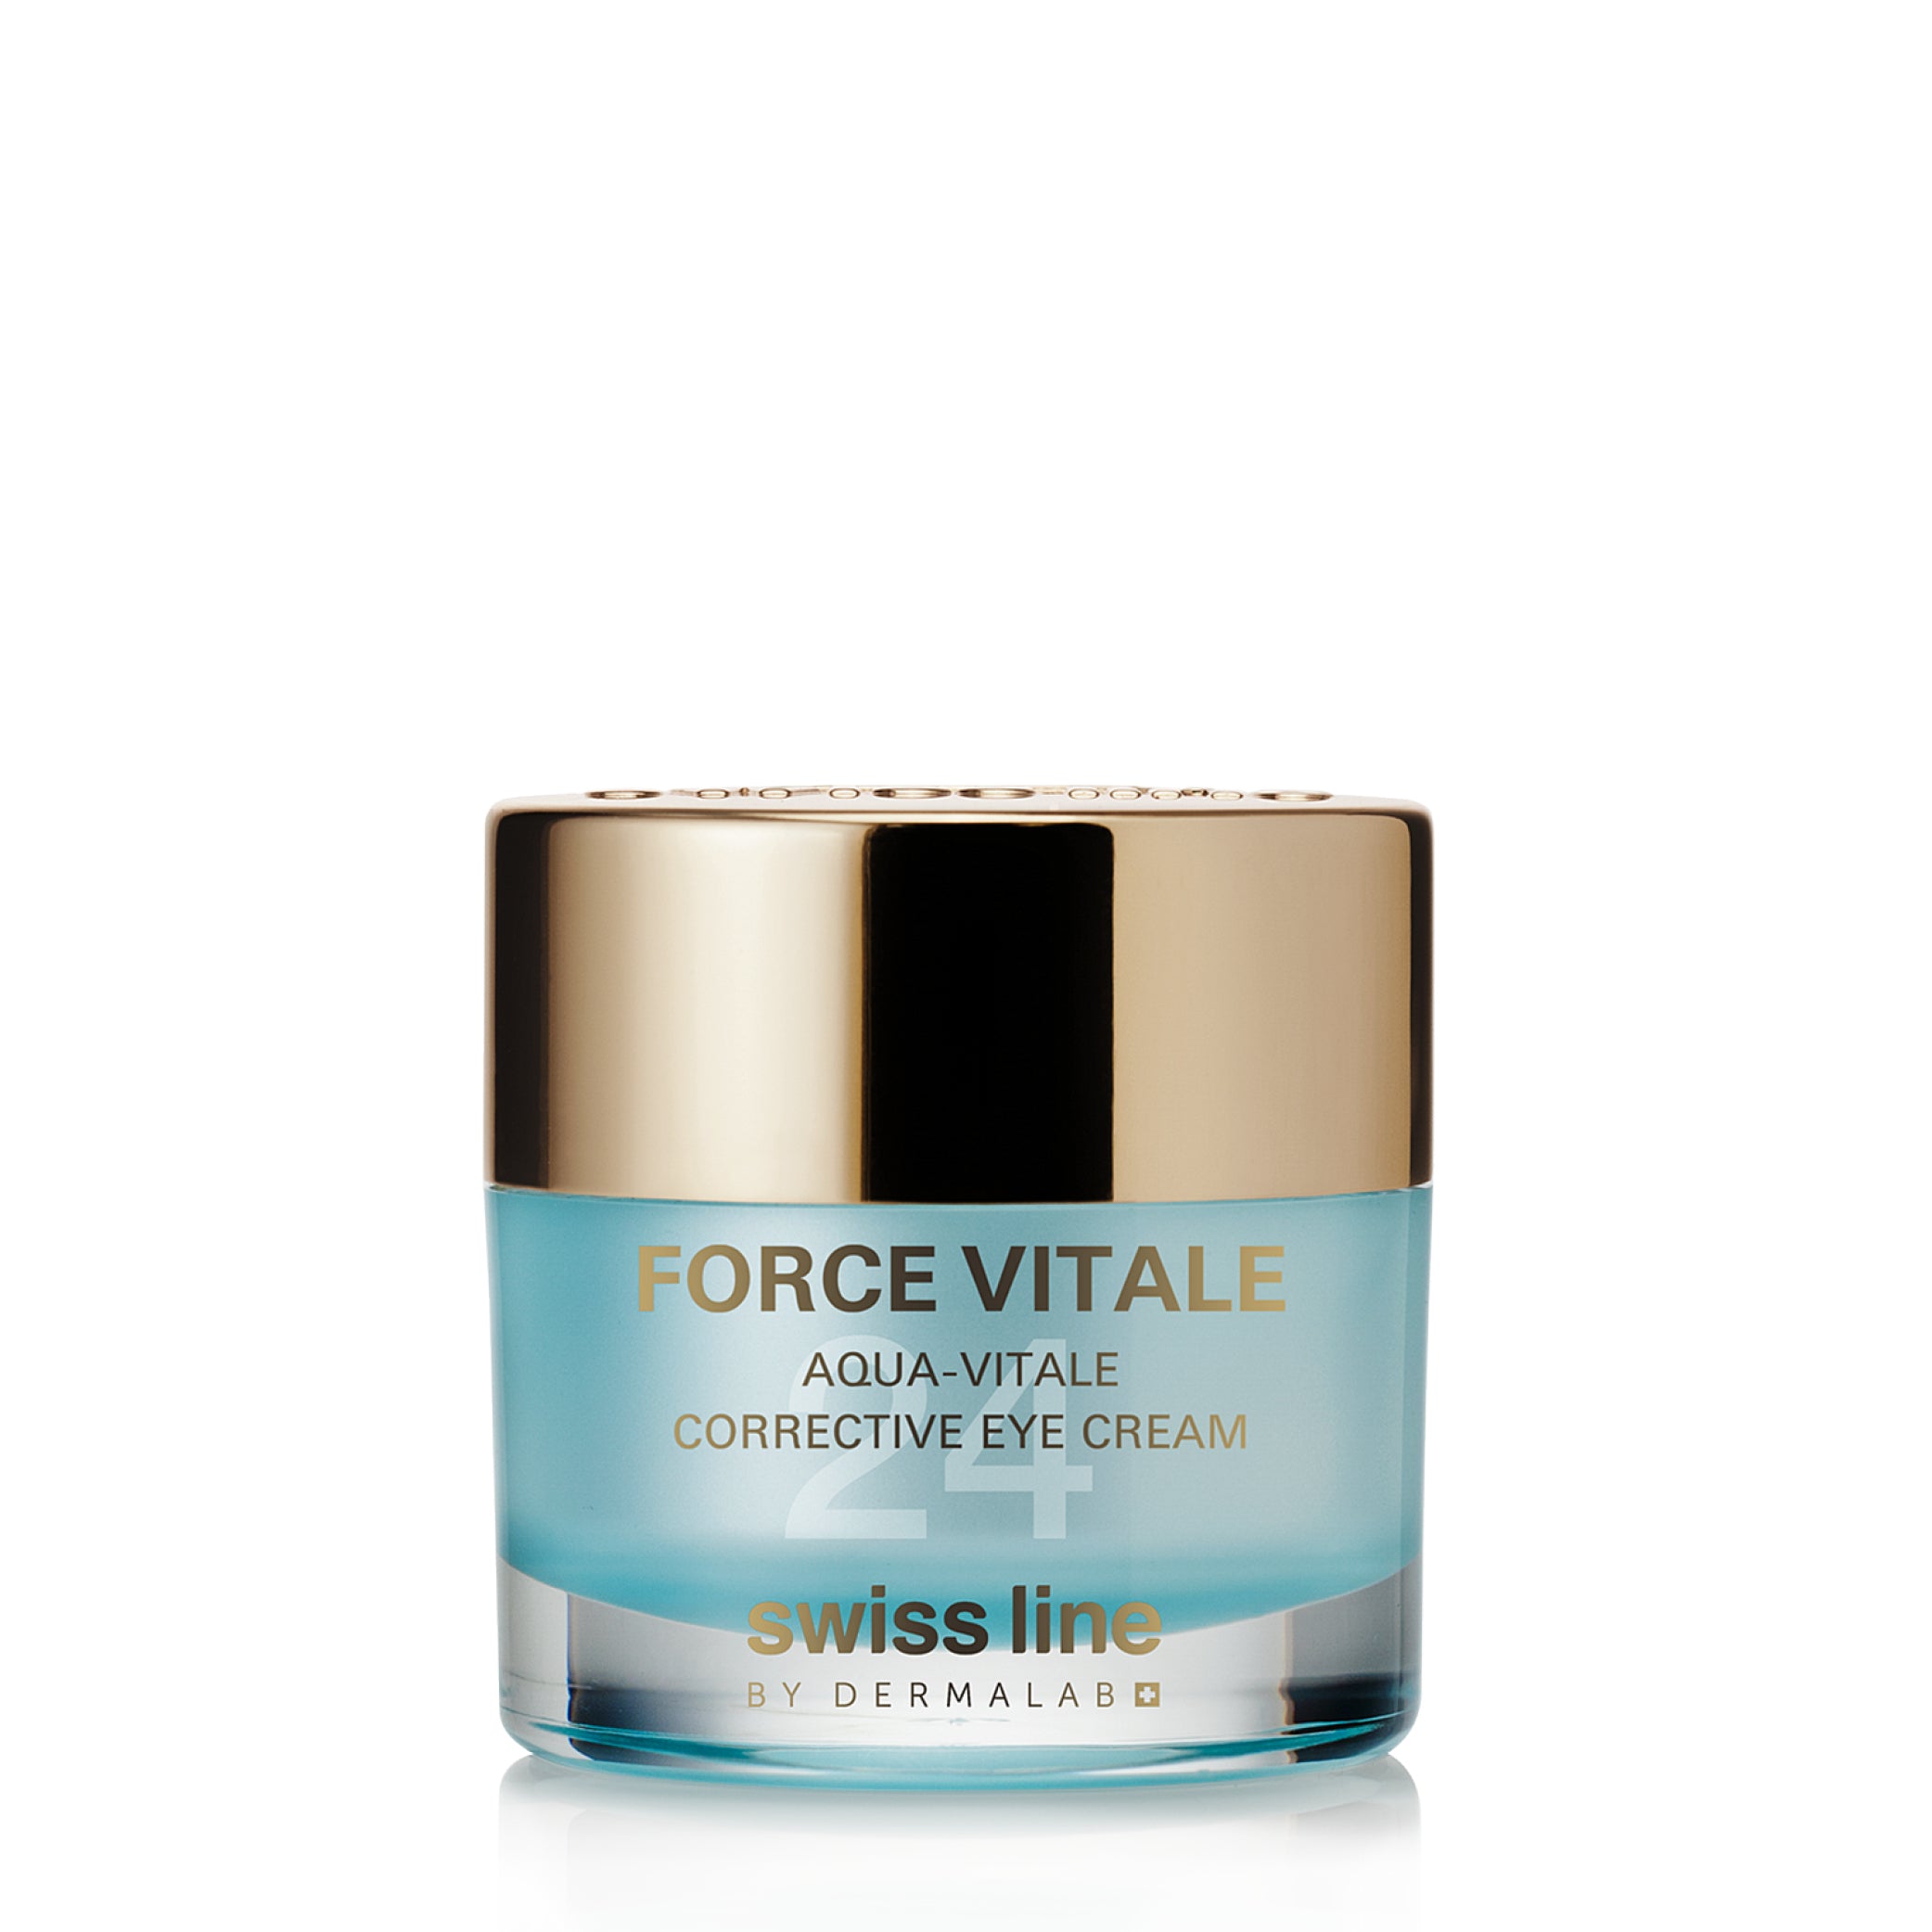 Force Vitale Aqua-Vitale Corrective Eye Cream